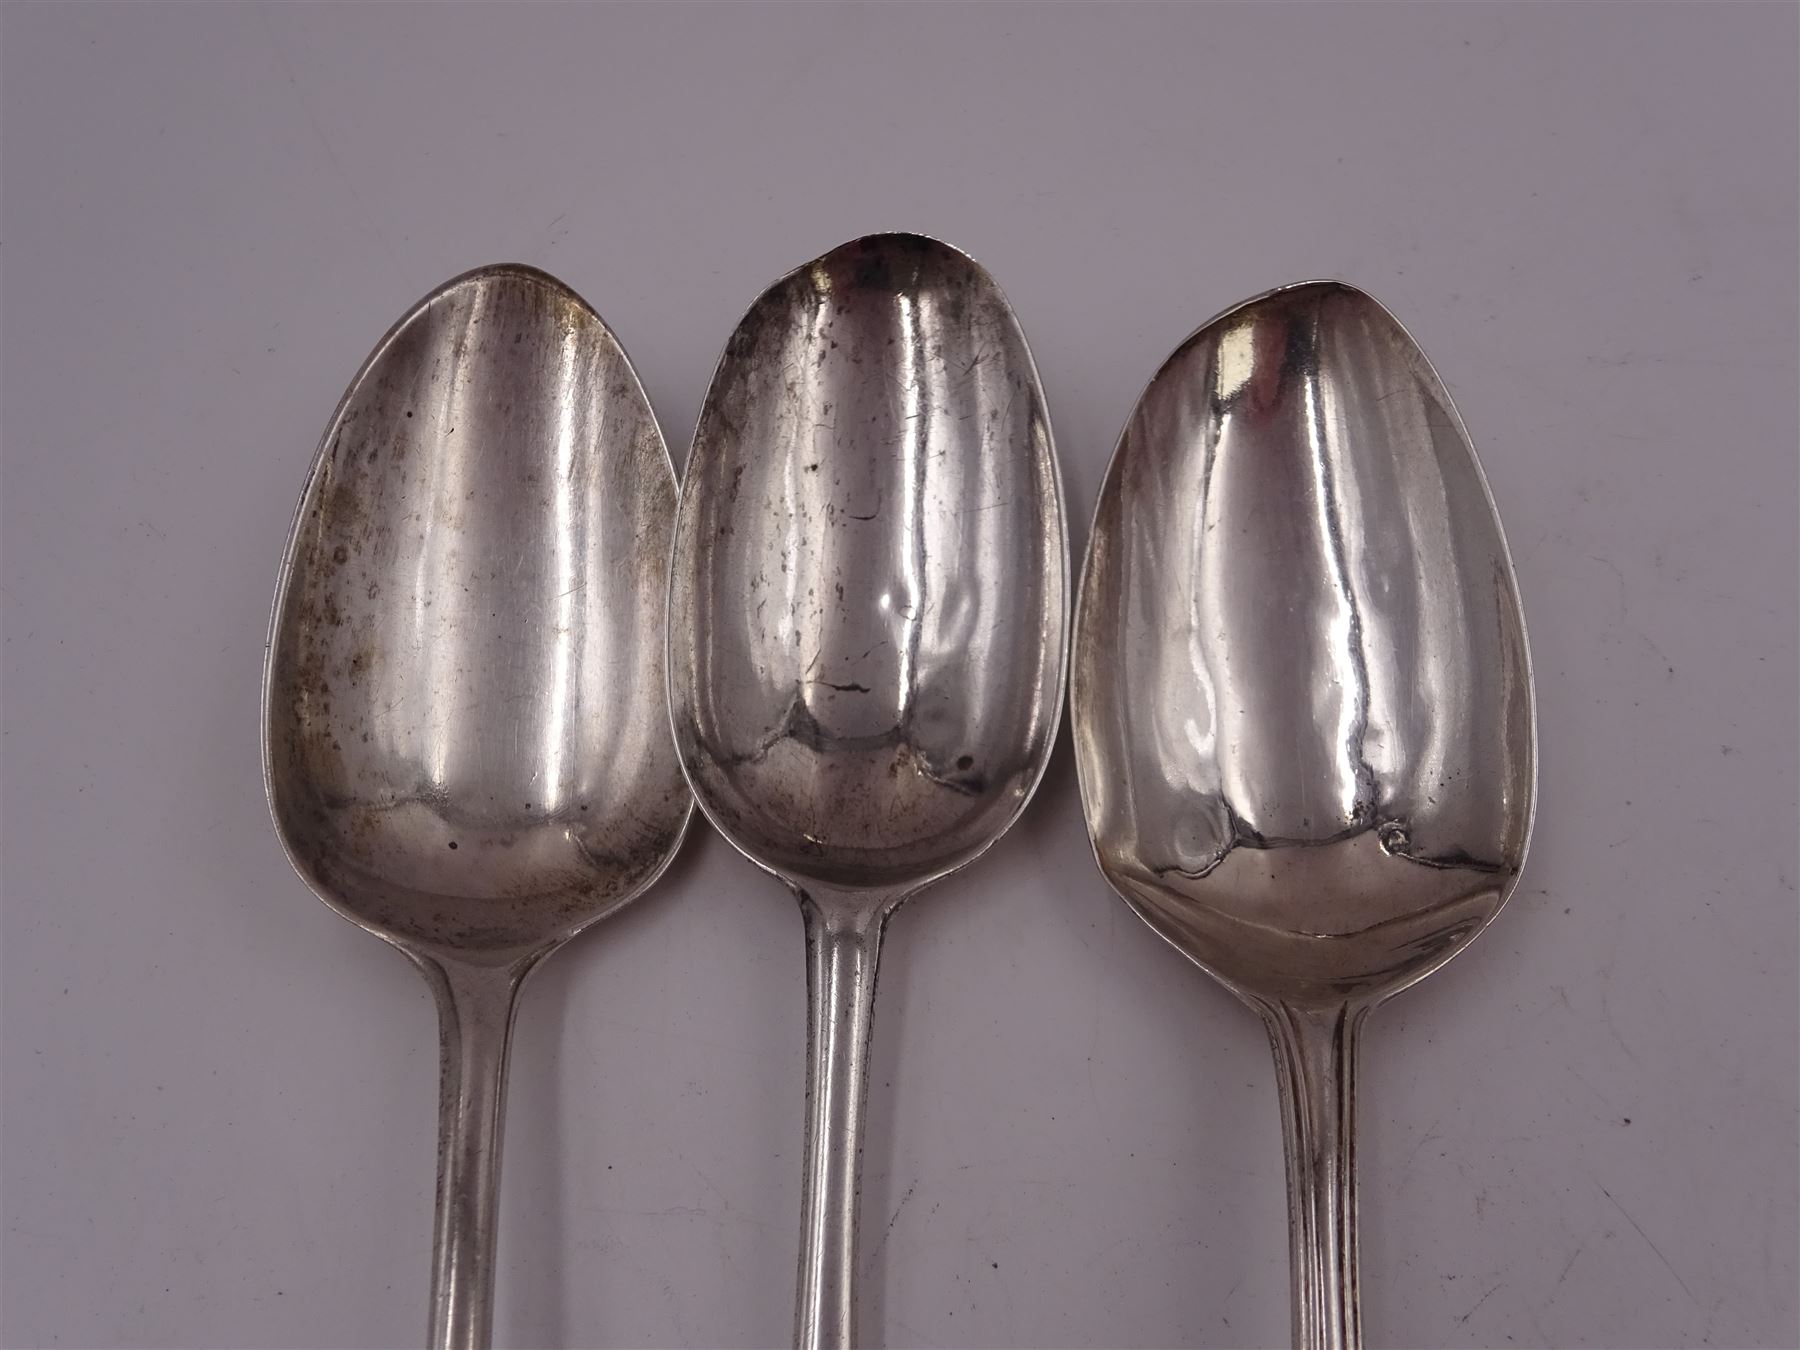 George II silver Hanoverian pattern table spoon - Image 2 of 3